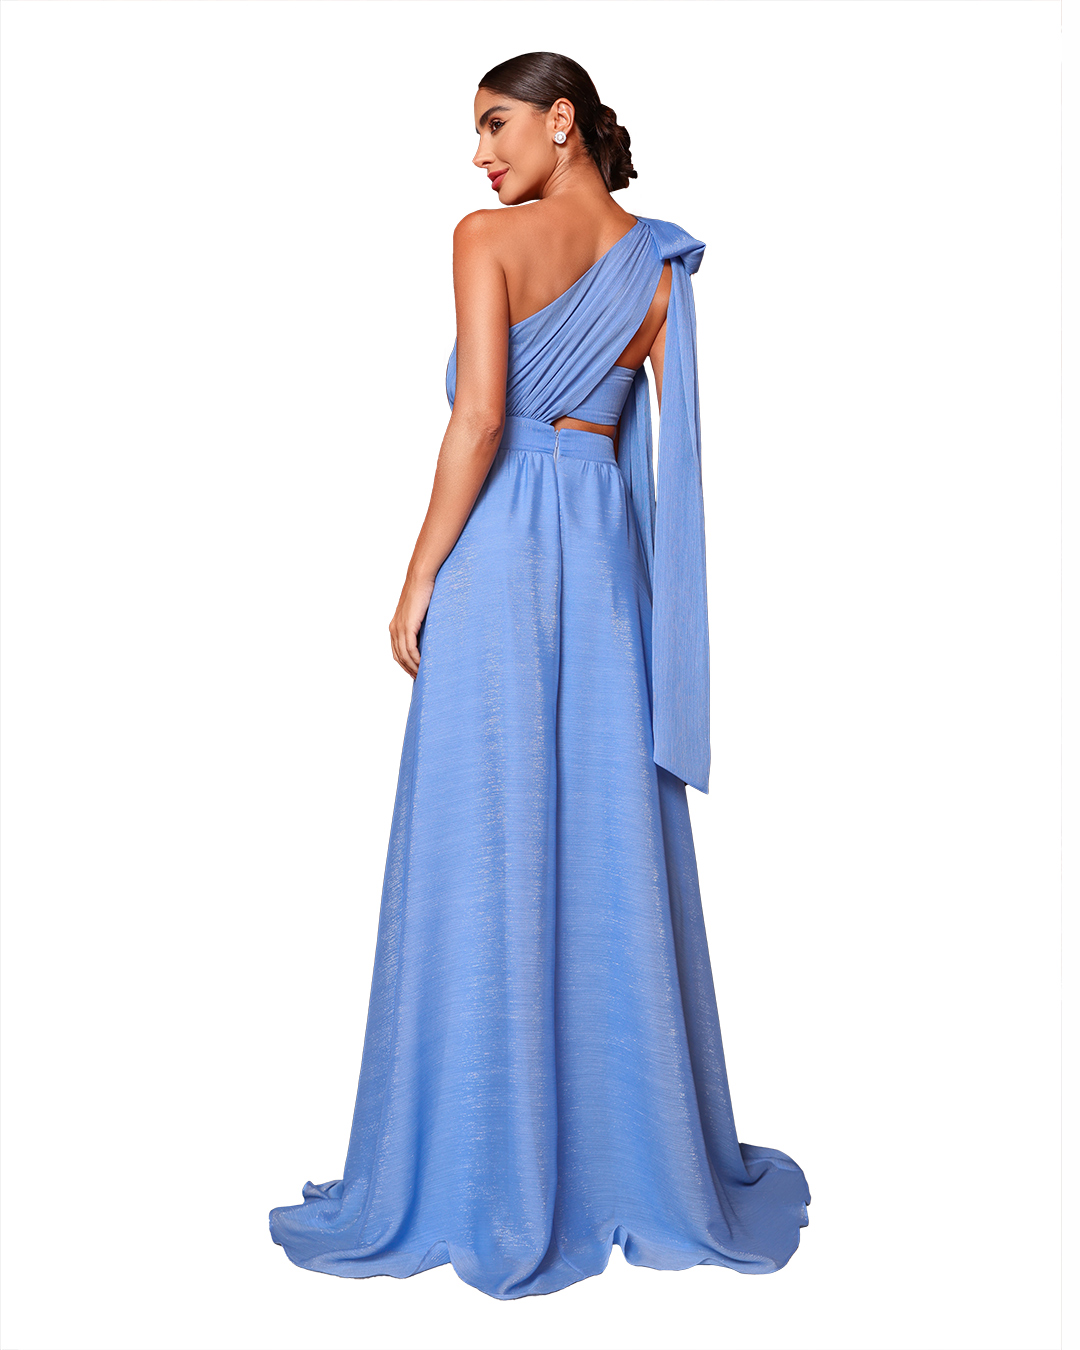 Dot Clothing - Vestido Dot Clothing Longo com Top Azul Claro - 1868AZULCL